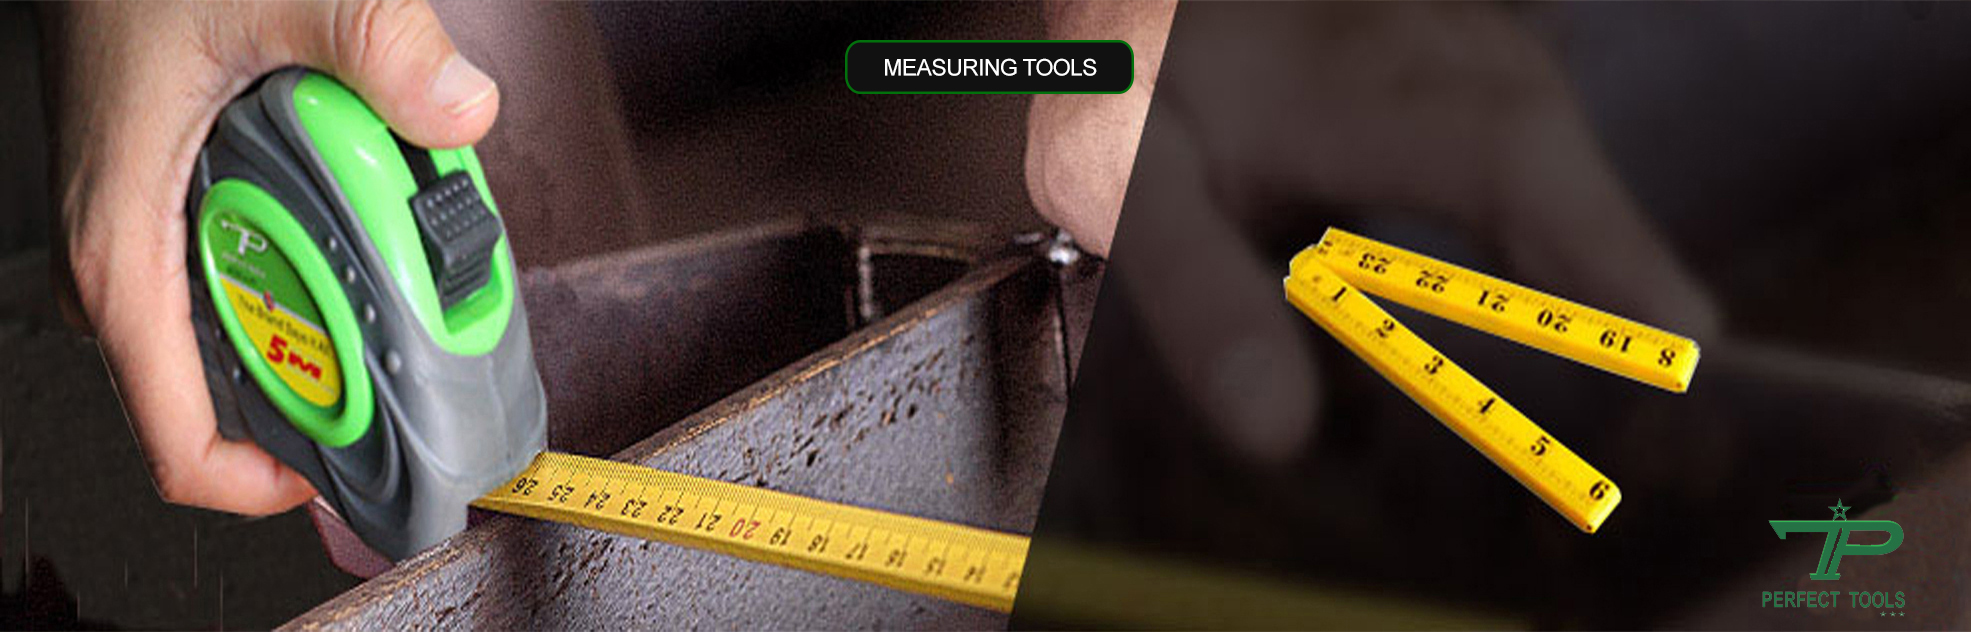 perfect tools measuring tools